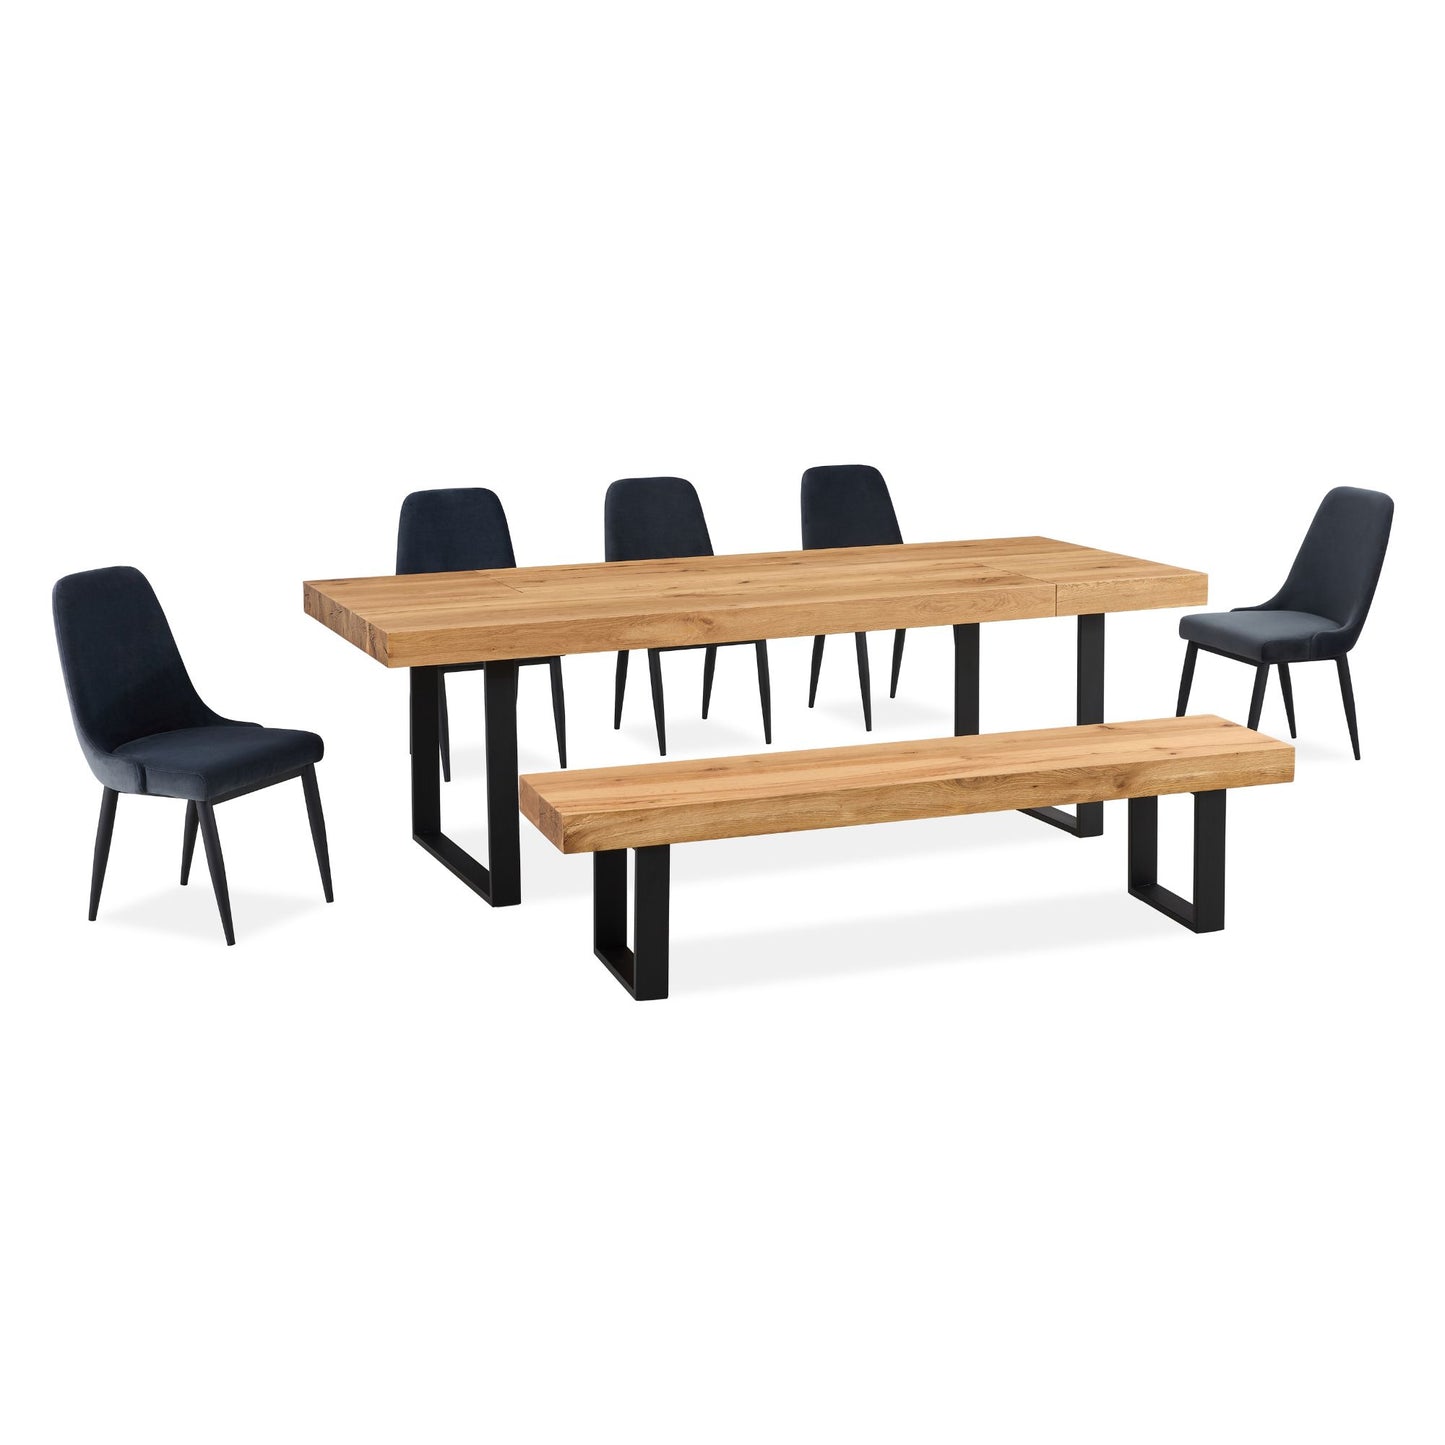 Ethan 150cm Dining Table Bench Seat Veneer Solid Oak Top Metal Leg - Natural